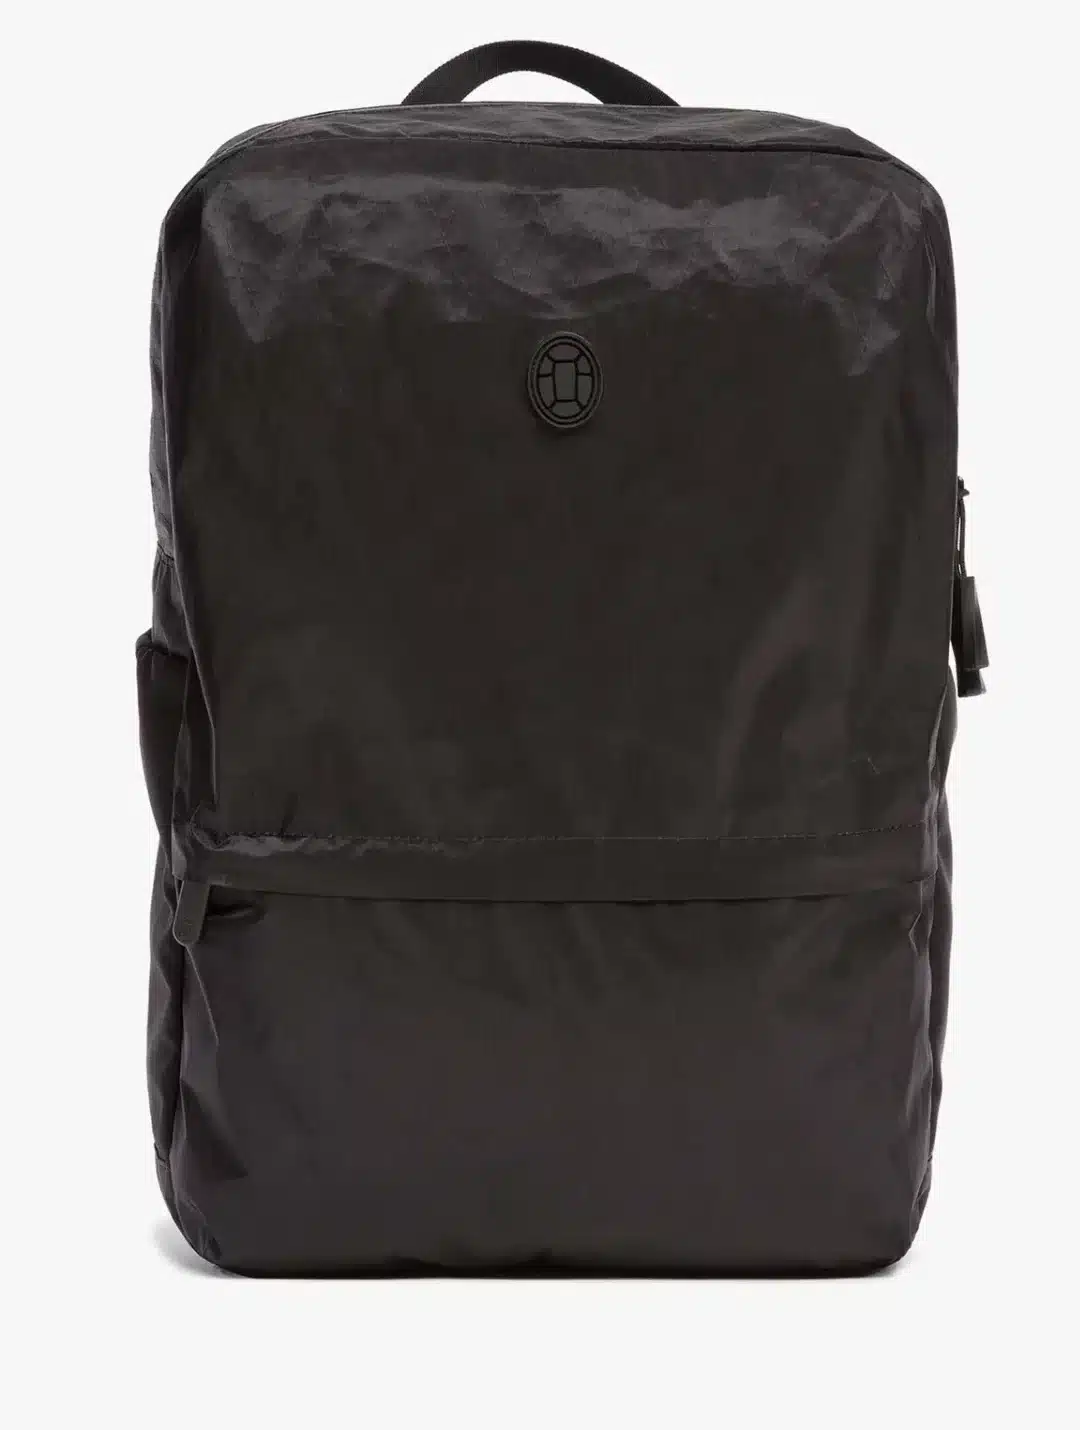 Best Packable Backpack - Best Laptop Packable Backpack - Tortuga Outbreaker travel daypack